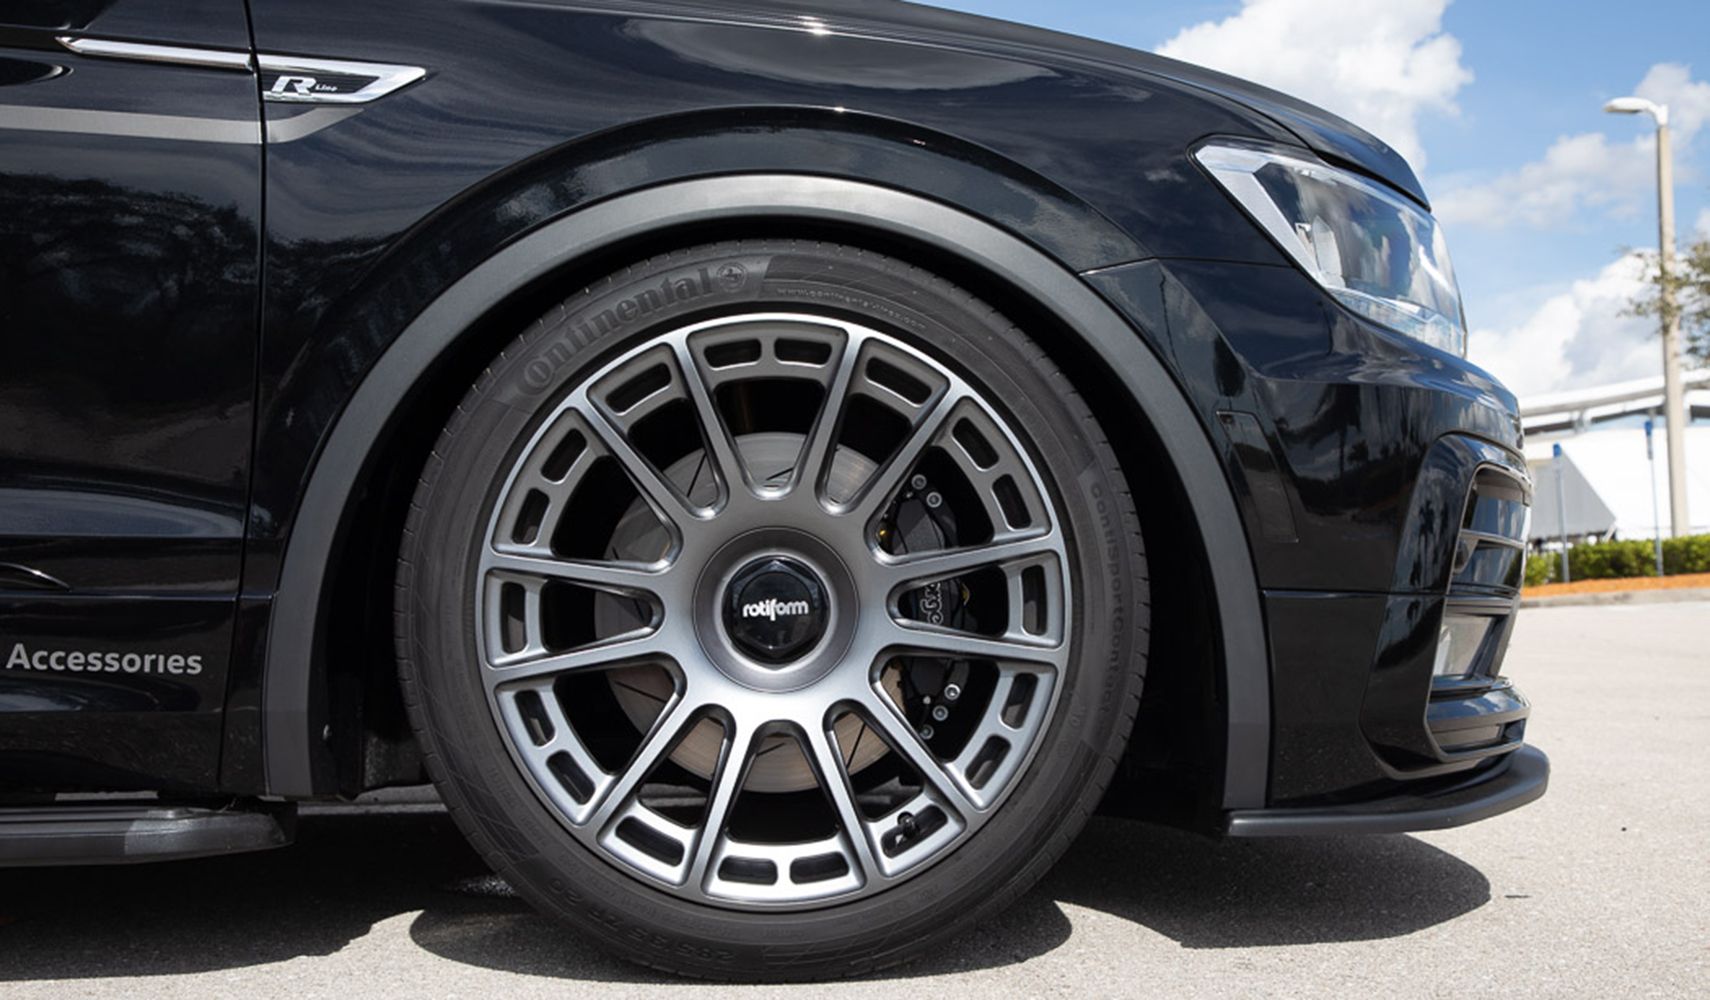 VW Tiguan SE R-Line Black RiNo wheels and tires